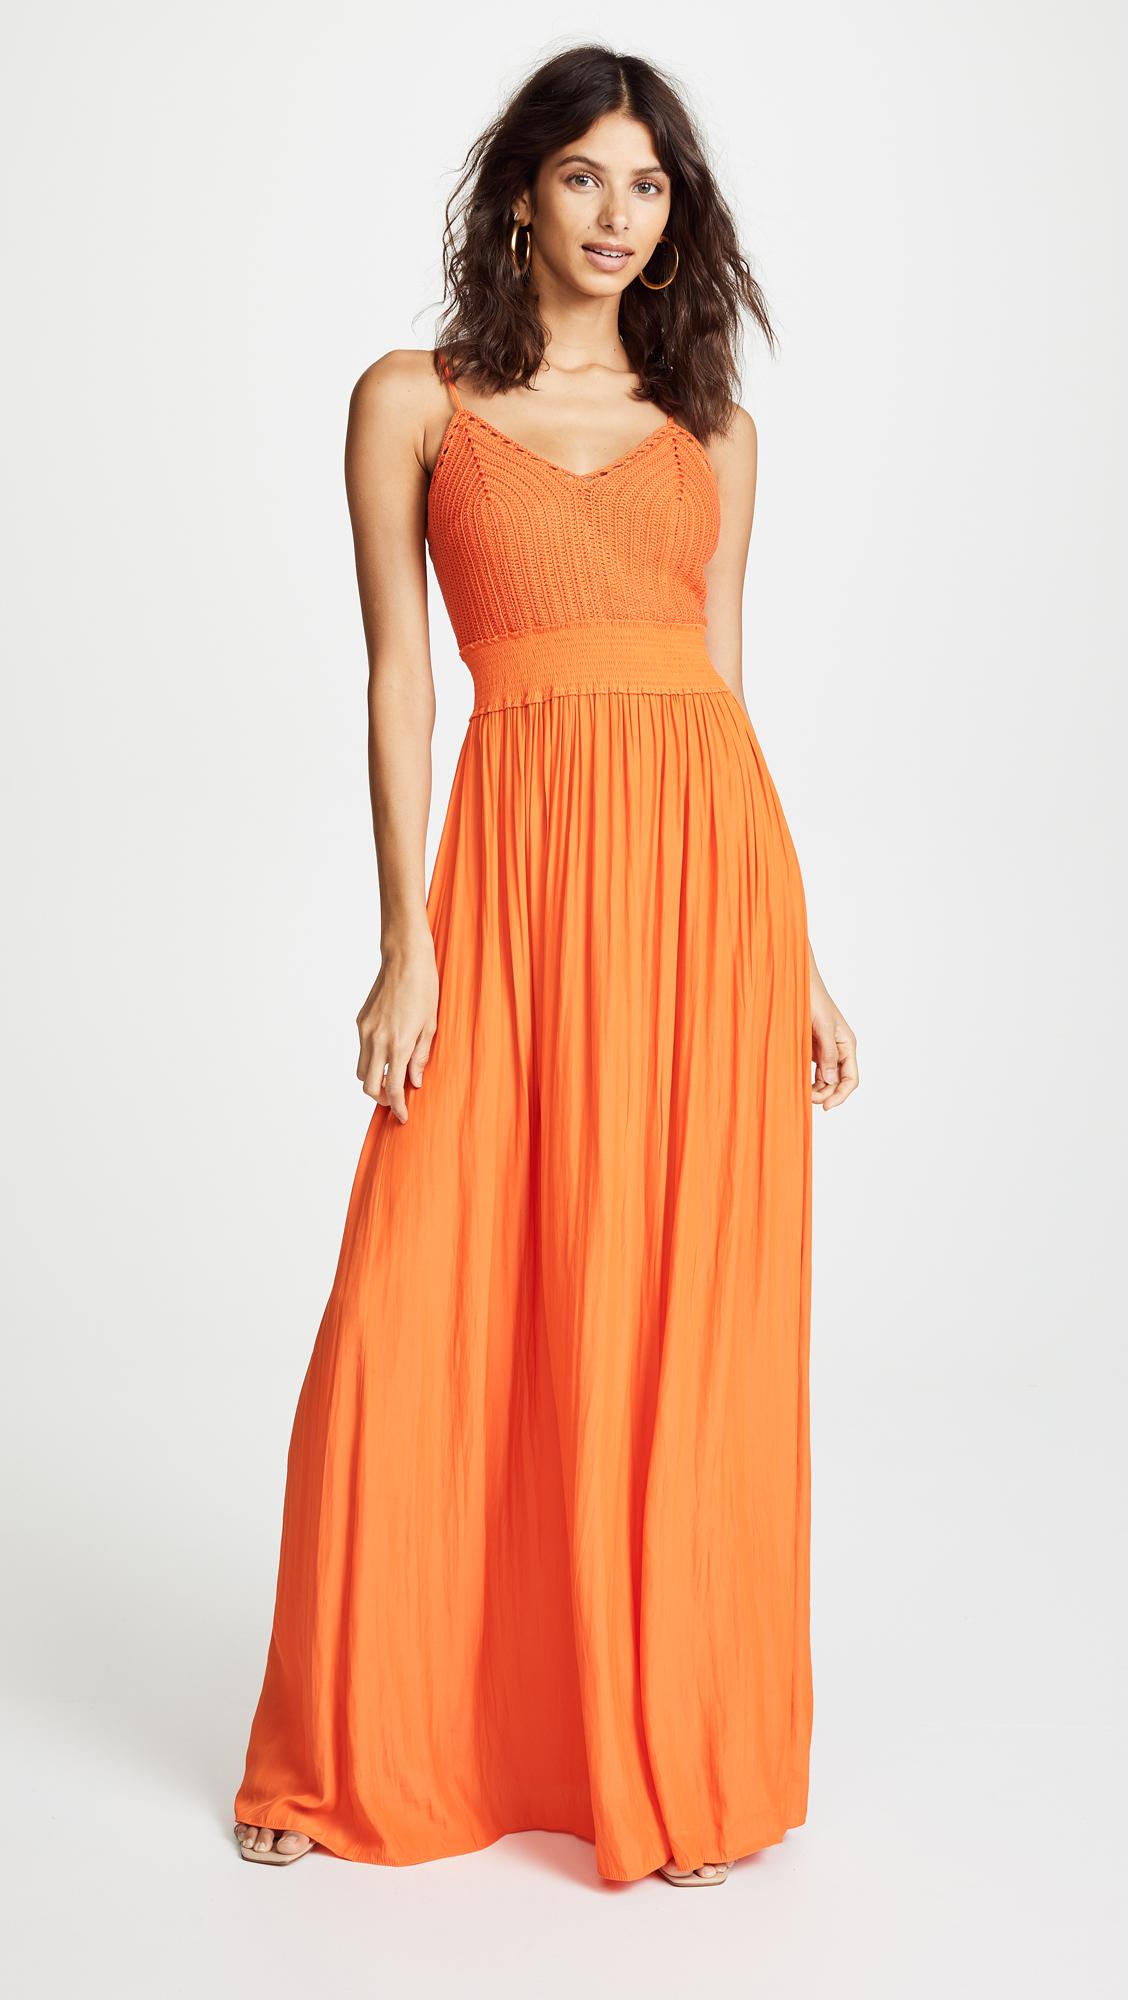 Ramy Brook Synthetic Stella Dress in Bright Orange (Orange) - Lyst